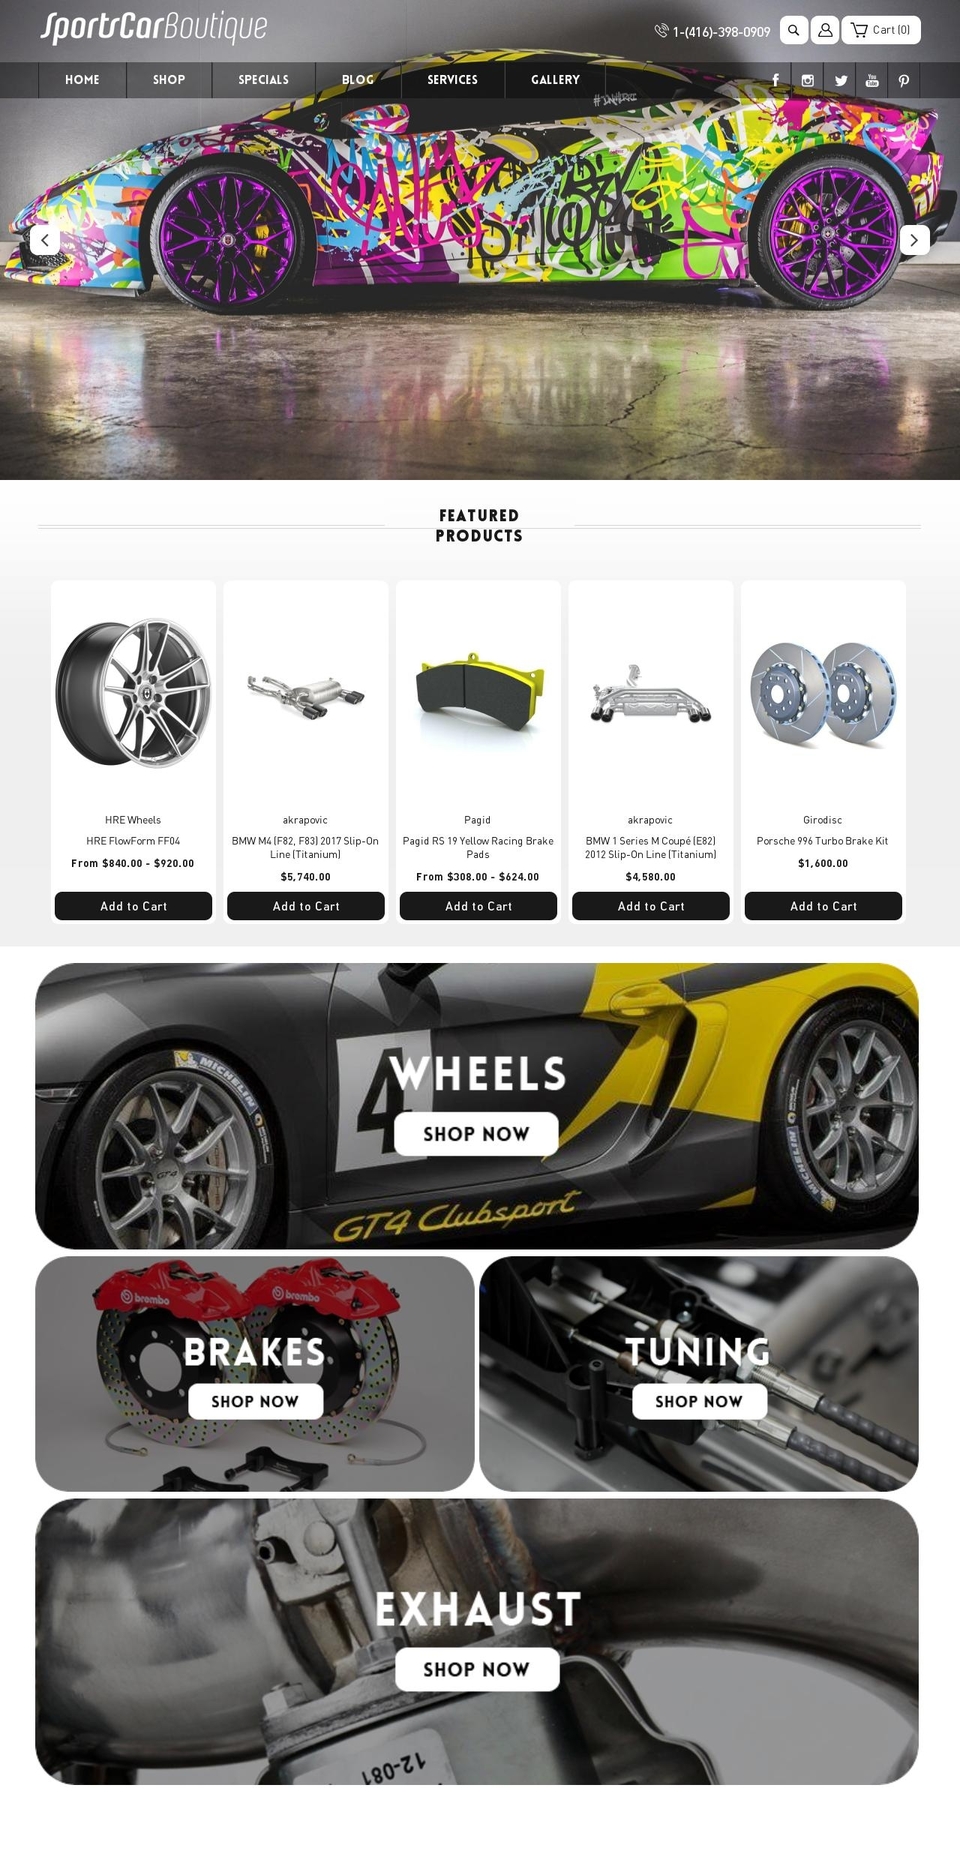 sportscarboutique.ca shopify website screenshot